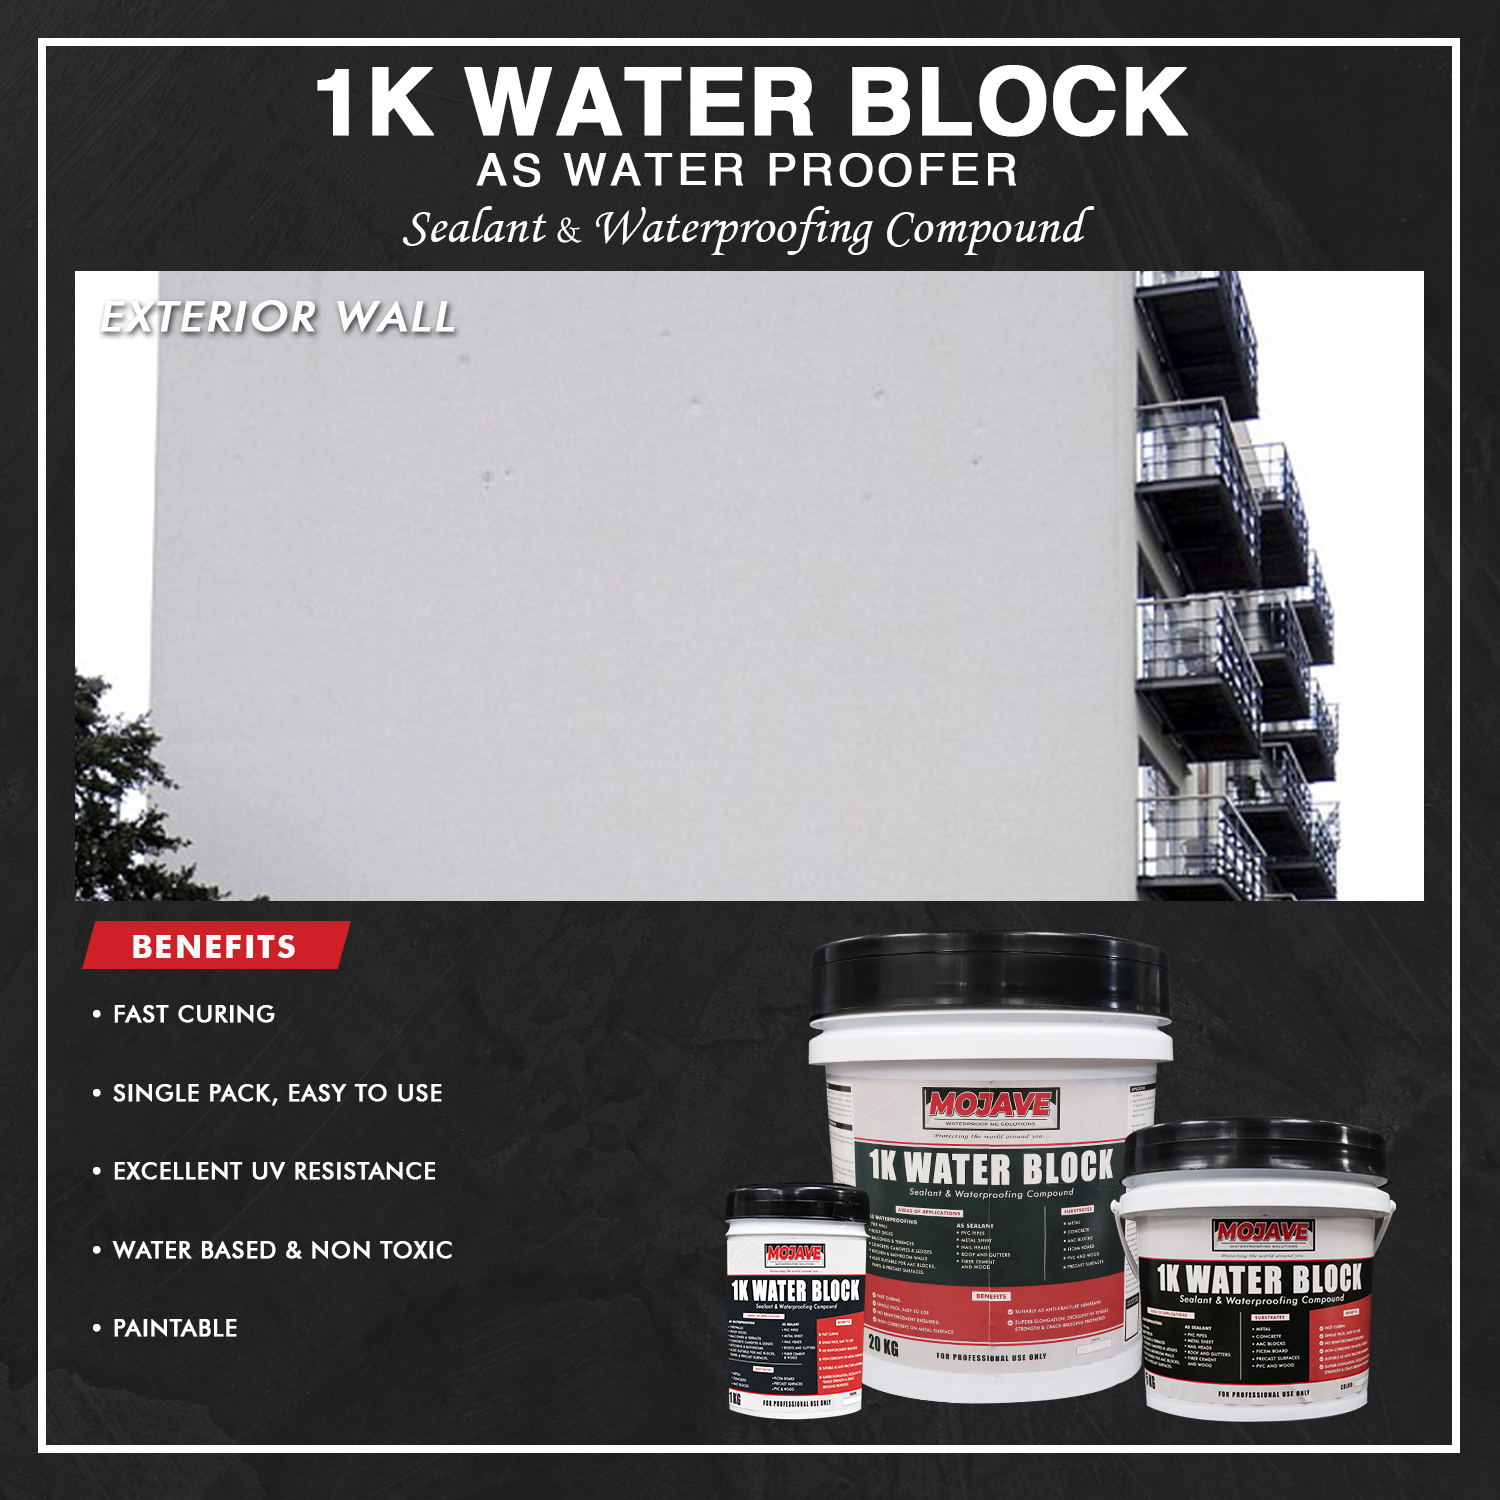 1k water block_WATER PROOF